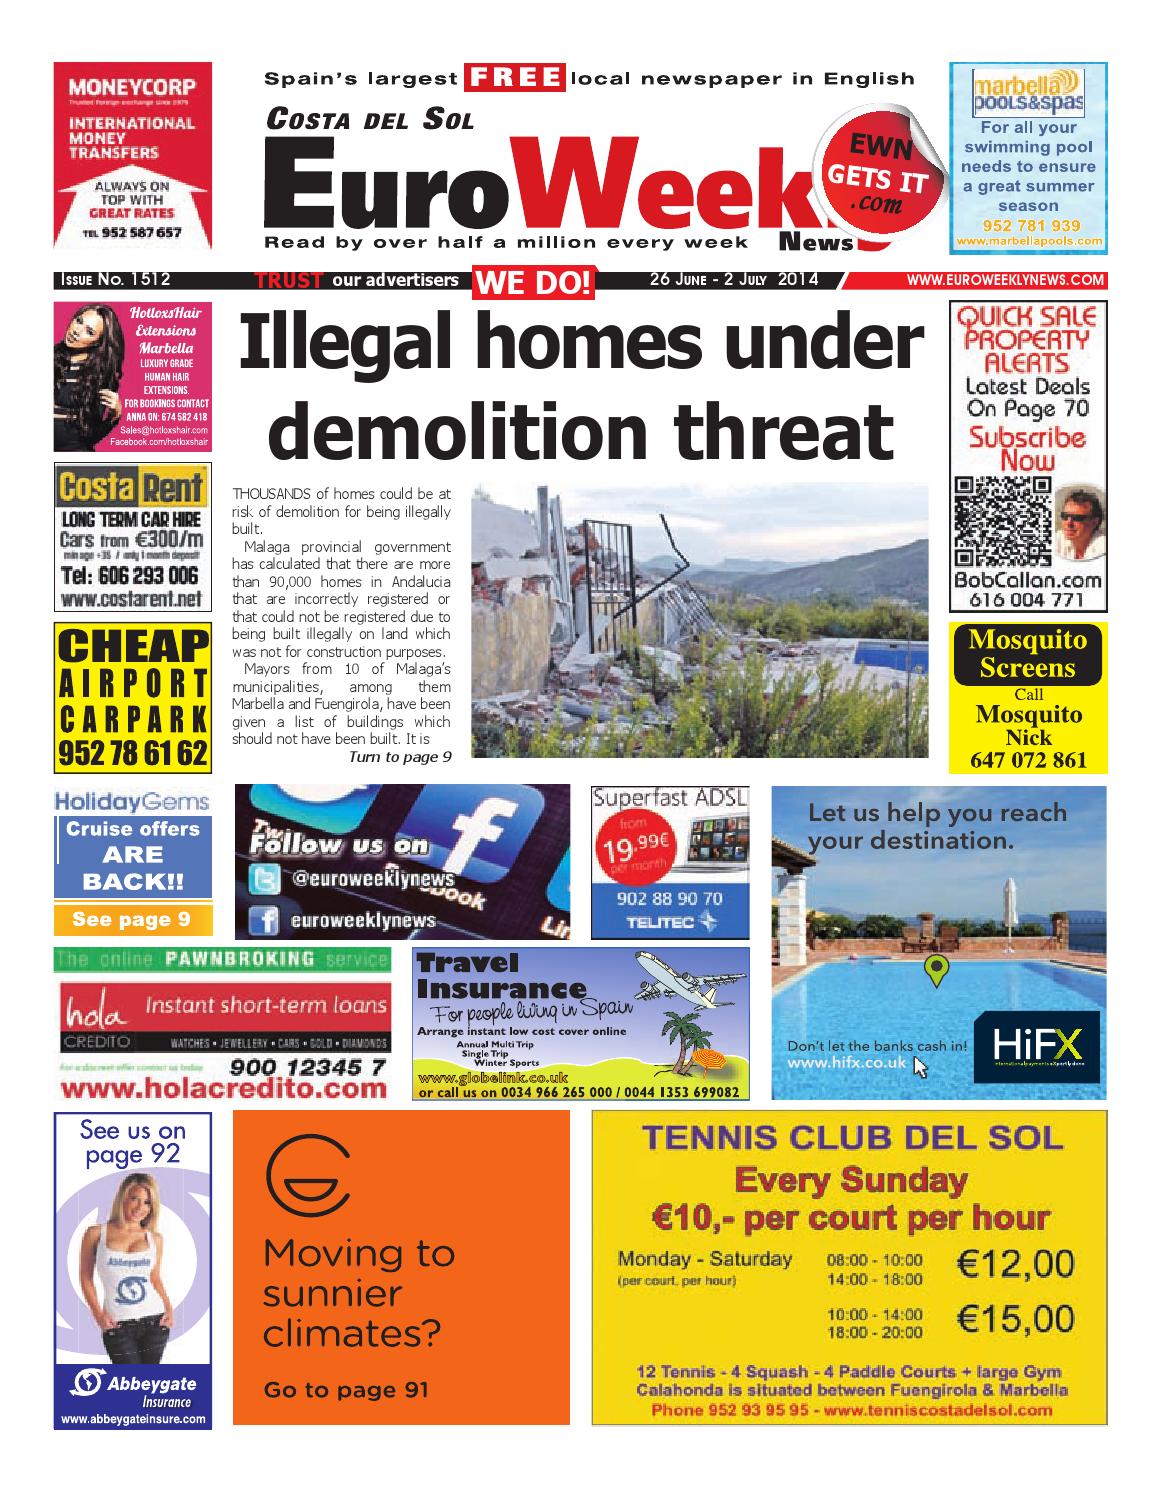 Salon De Jardin Lidl Unique Euro Weekly News Costa Del sol 26 June 2 July 2014 issue